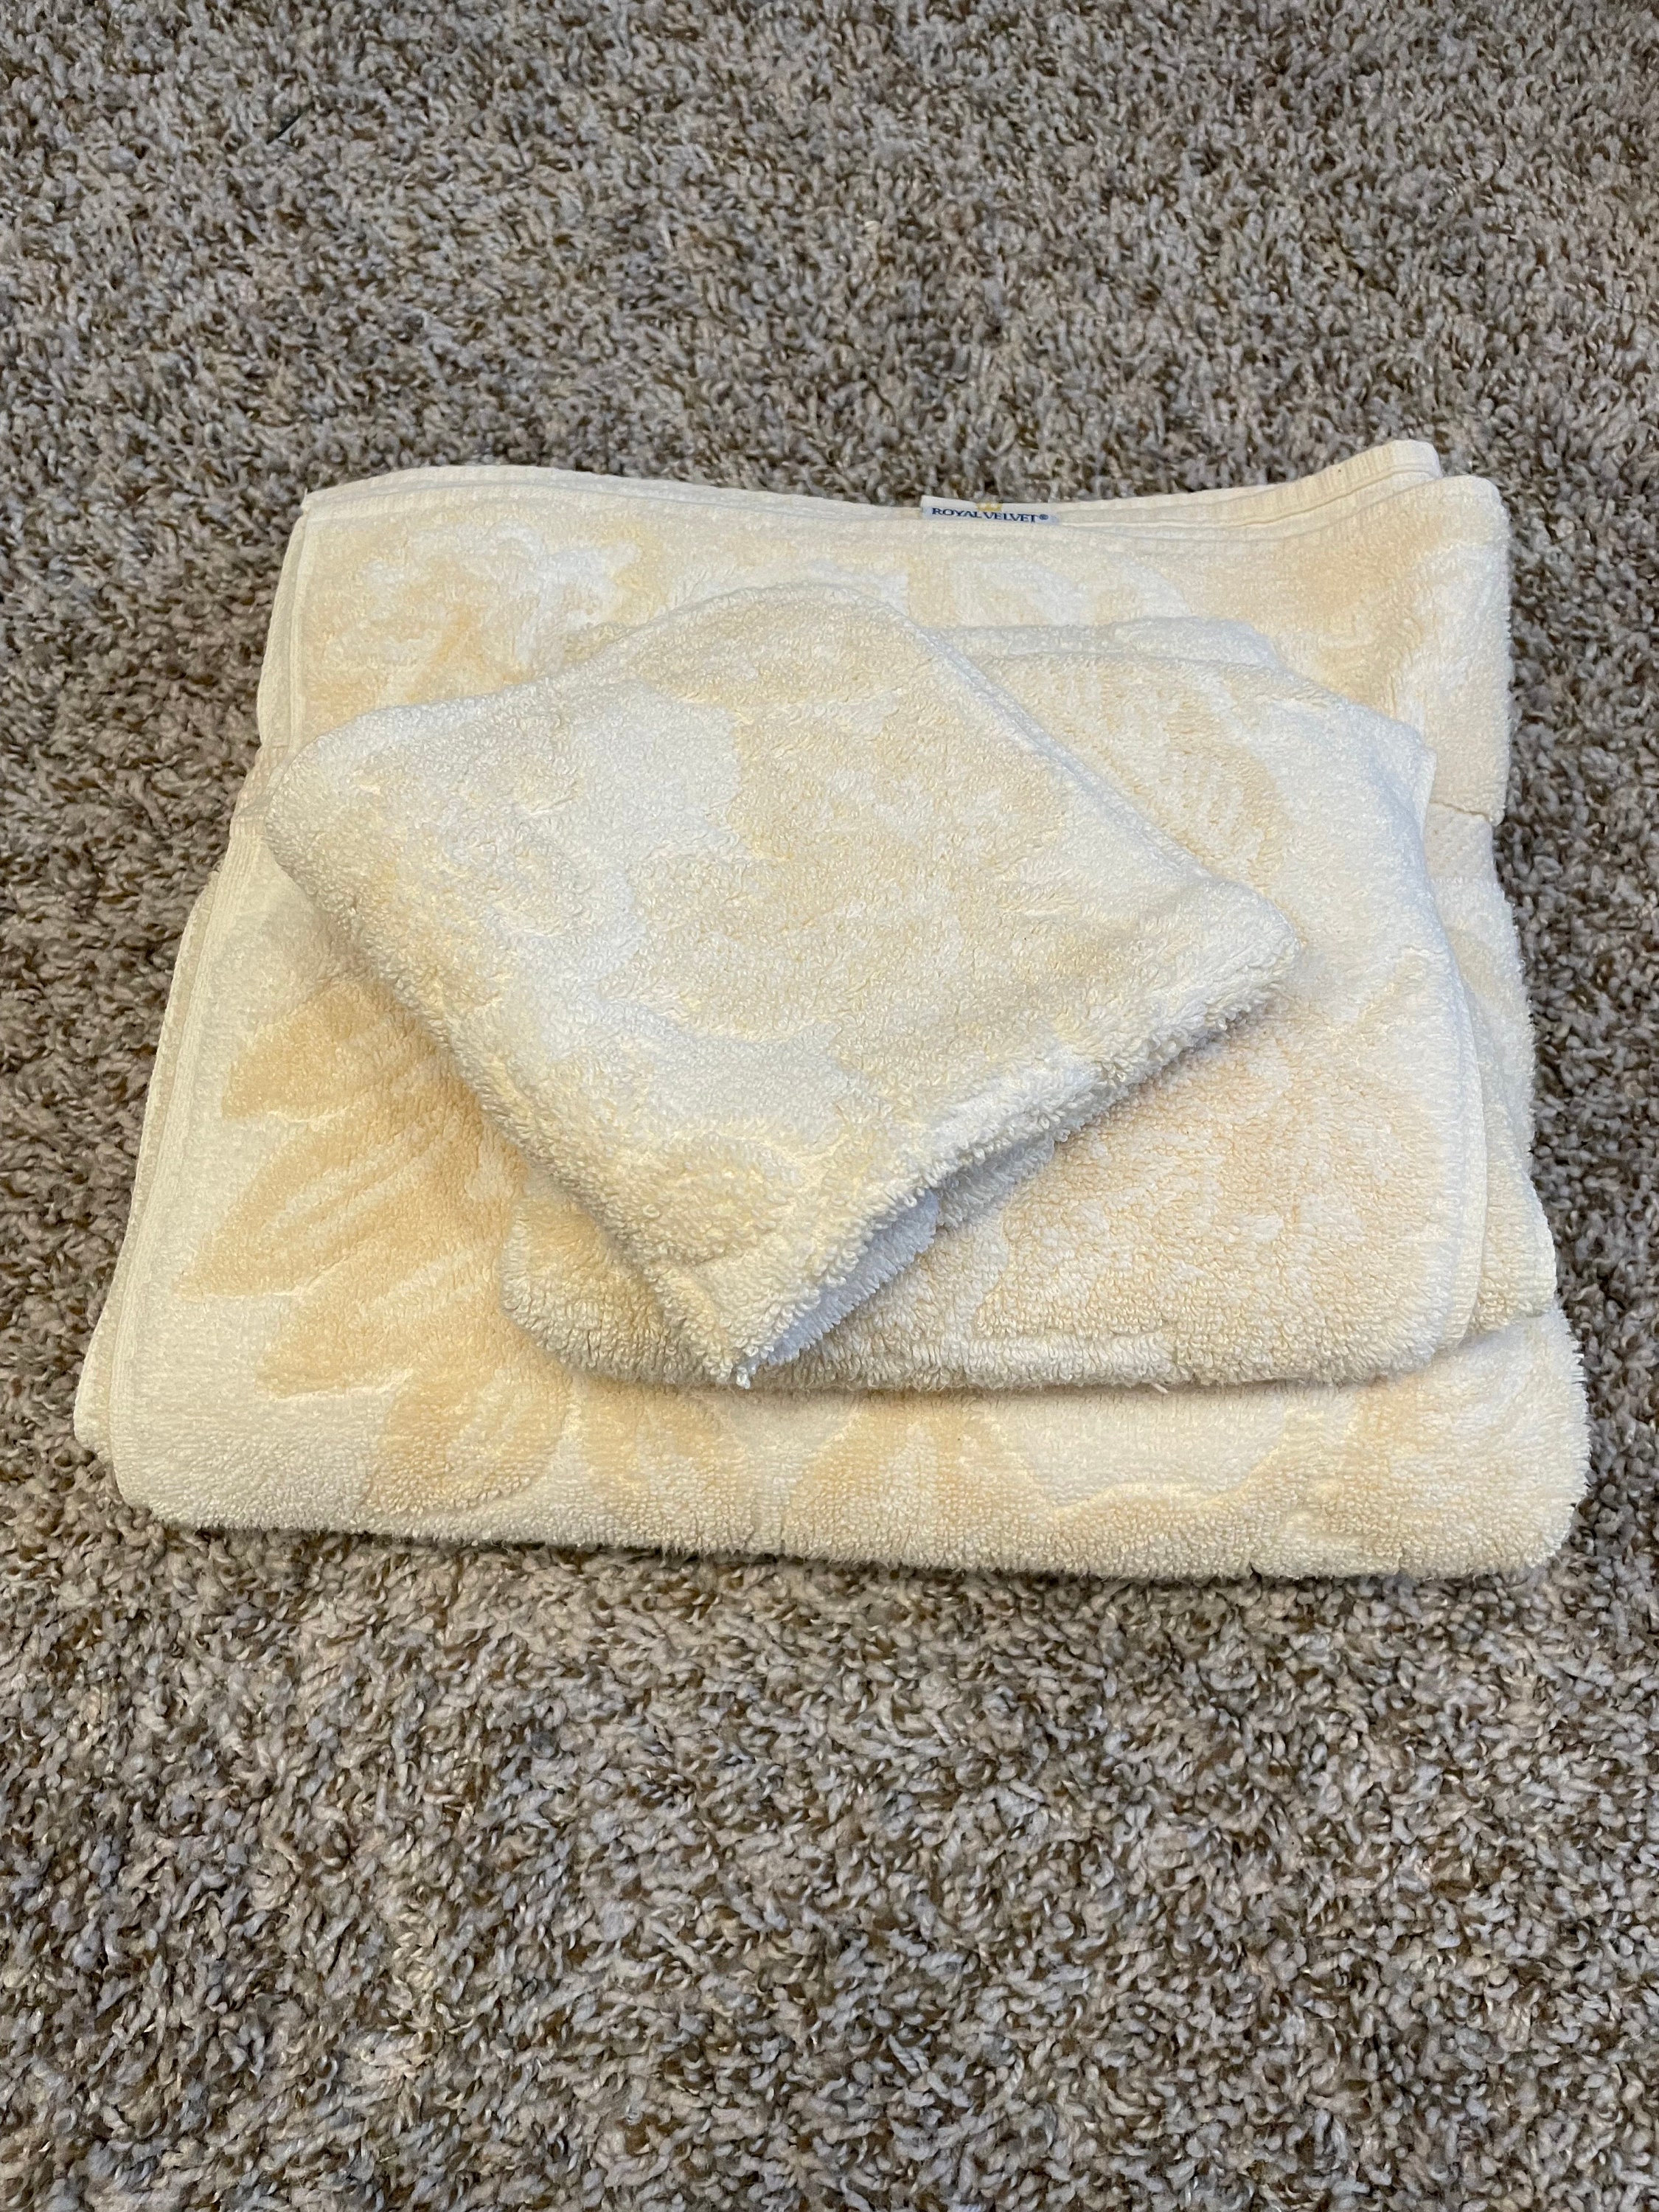 Royal Velvet Towels, Set of 6 — Home Williams